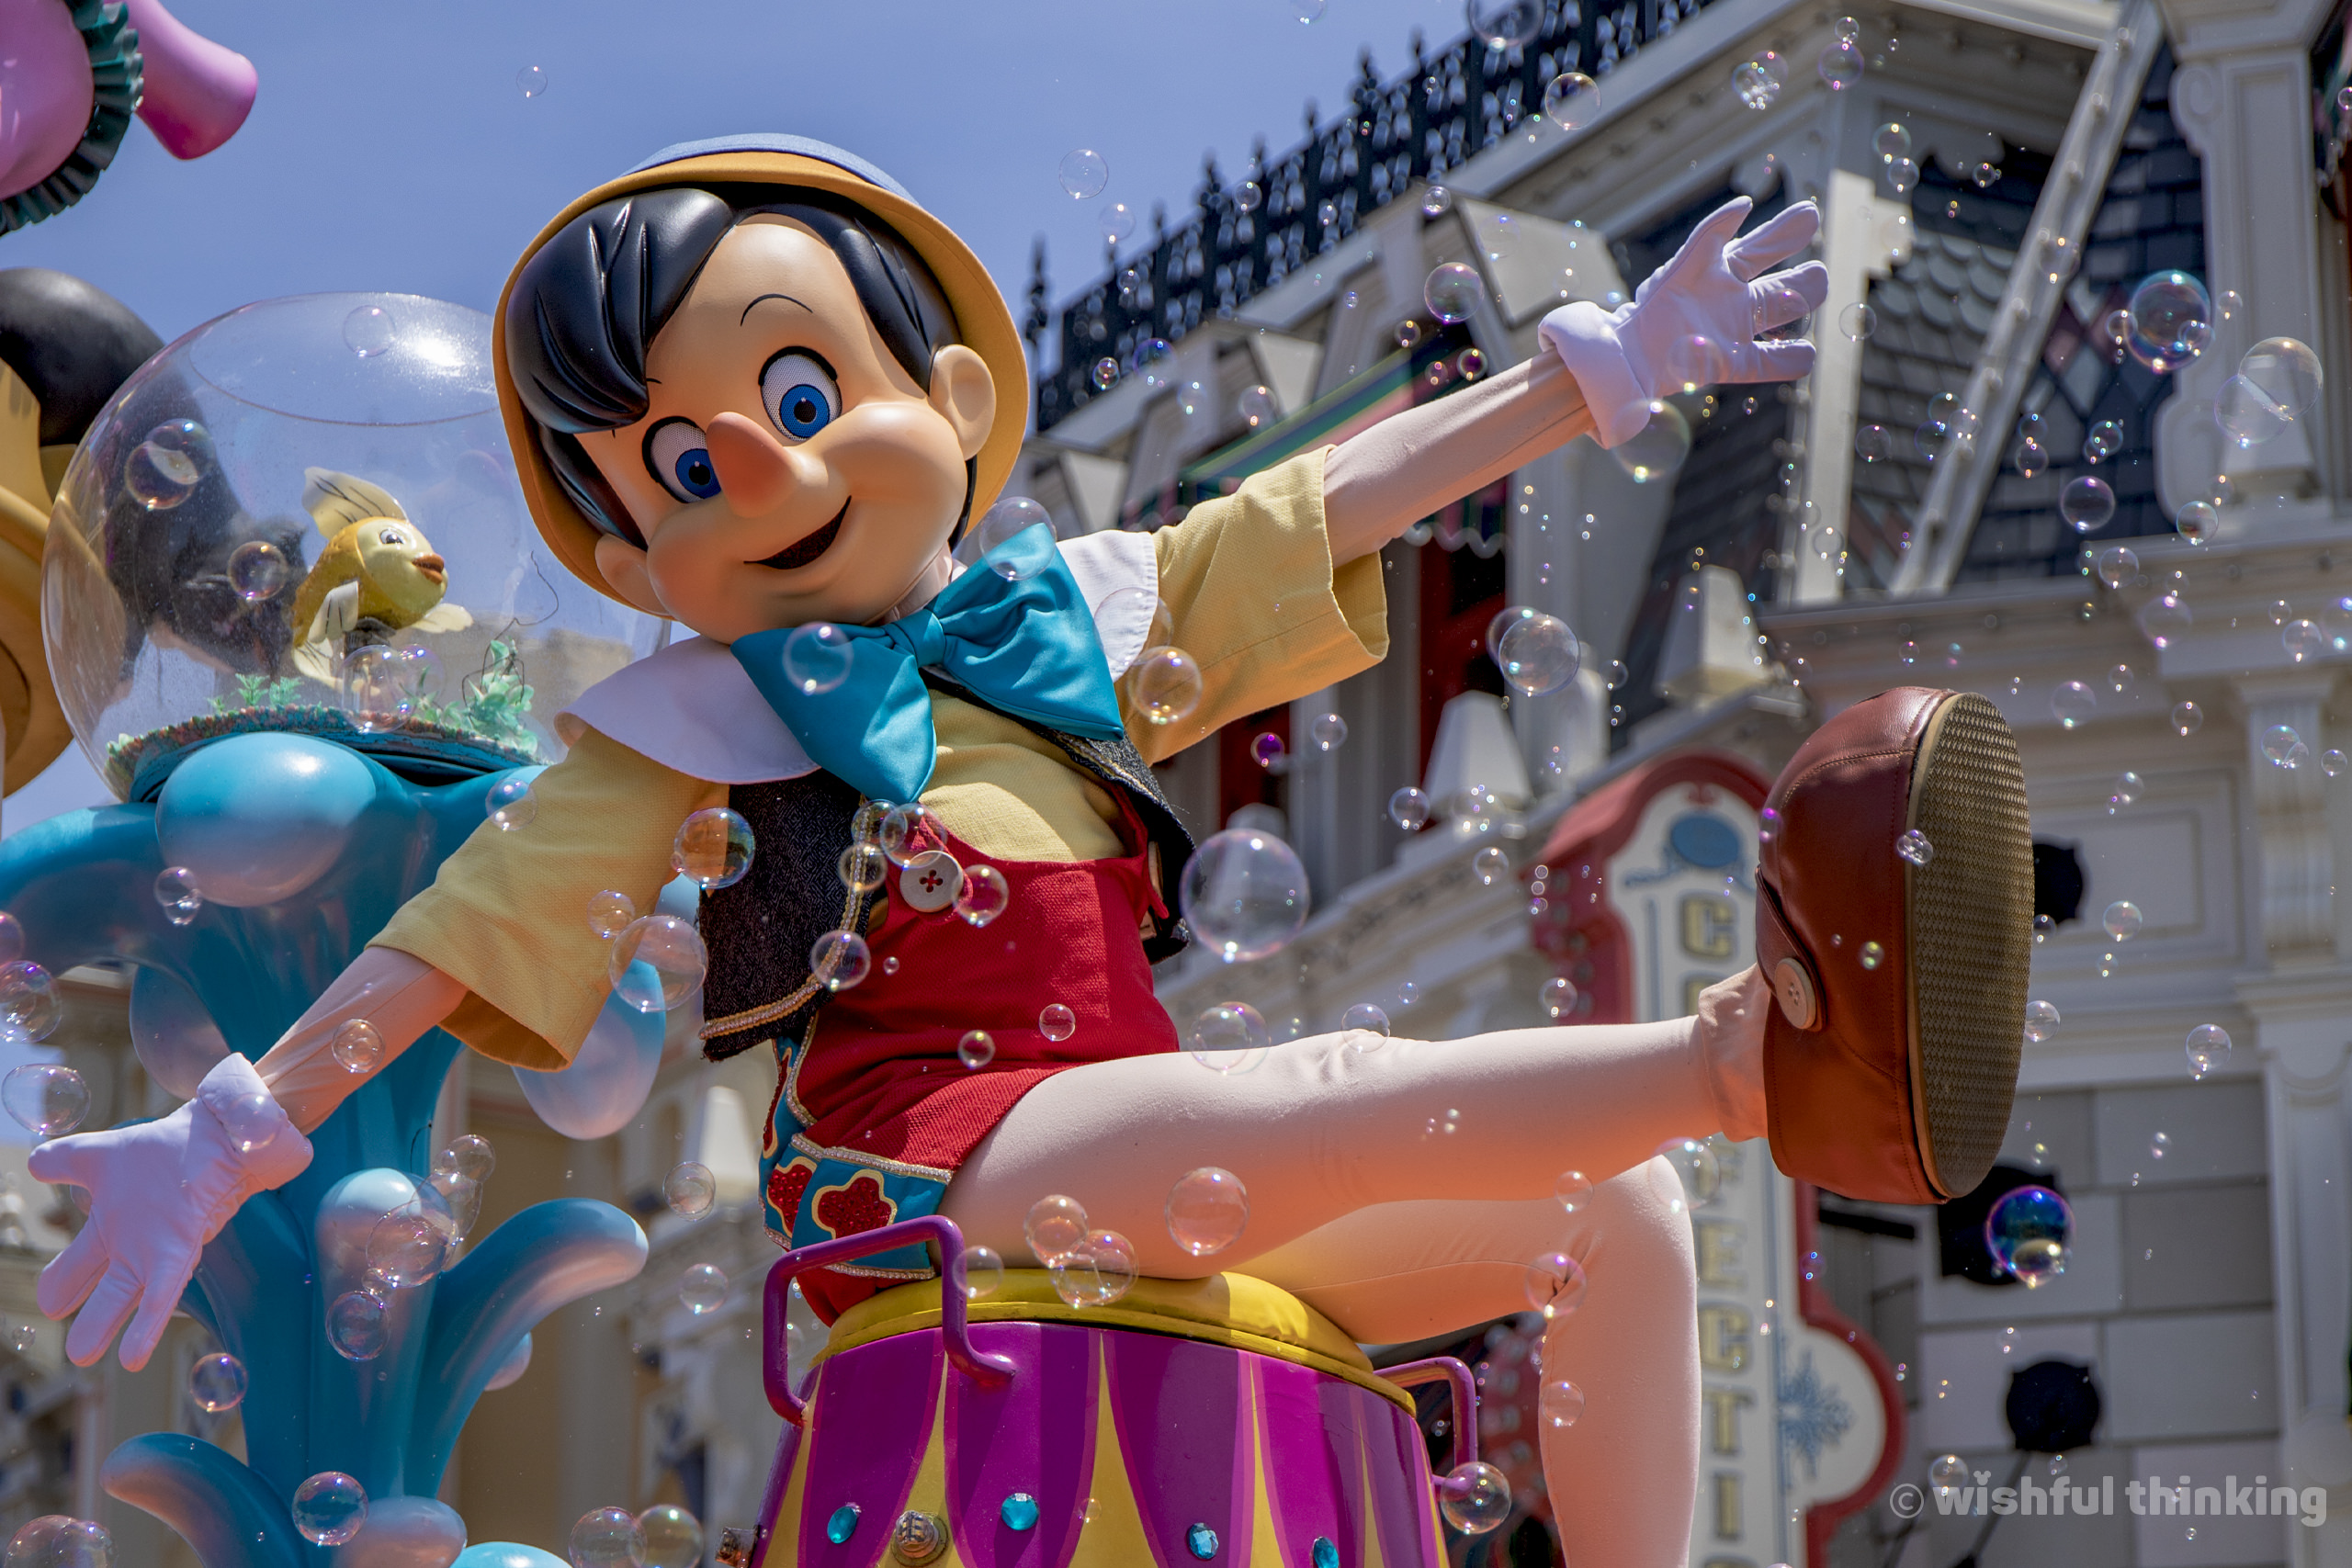 Pinocchio delights guests during the Festival of Fantasy Parade at Disney's Magic Kingdom in Orlando, Florida